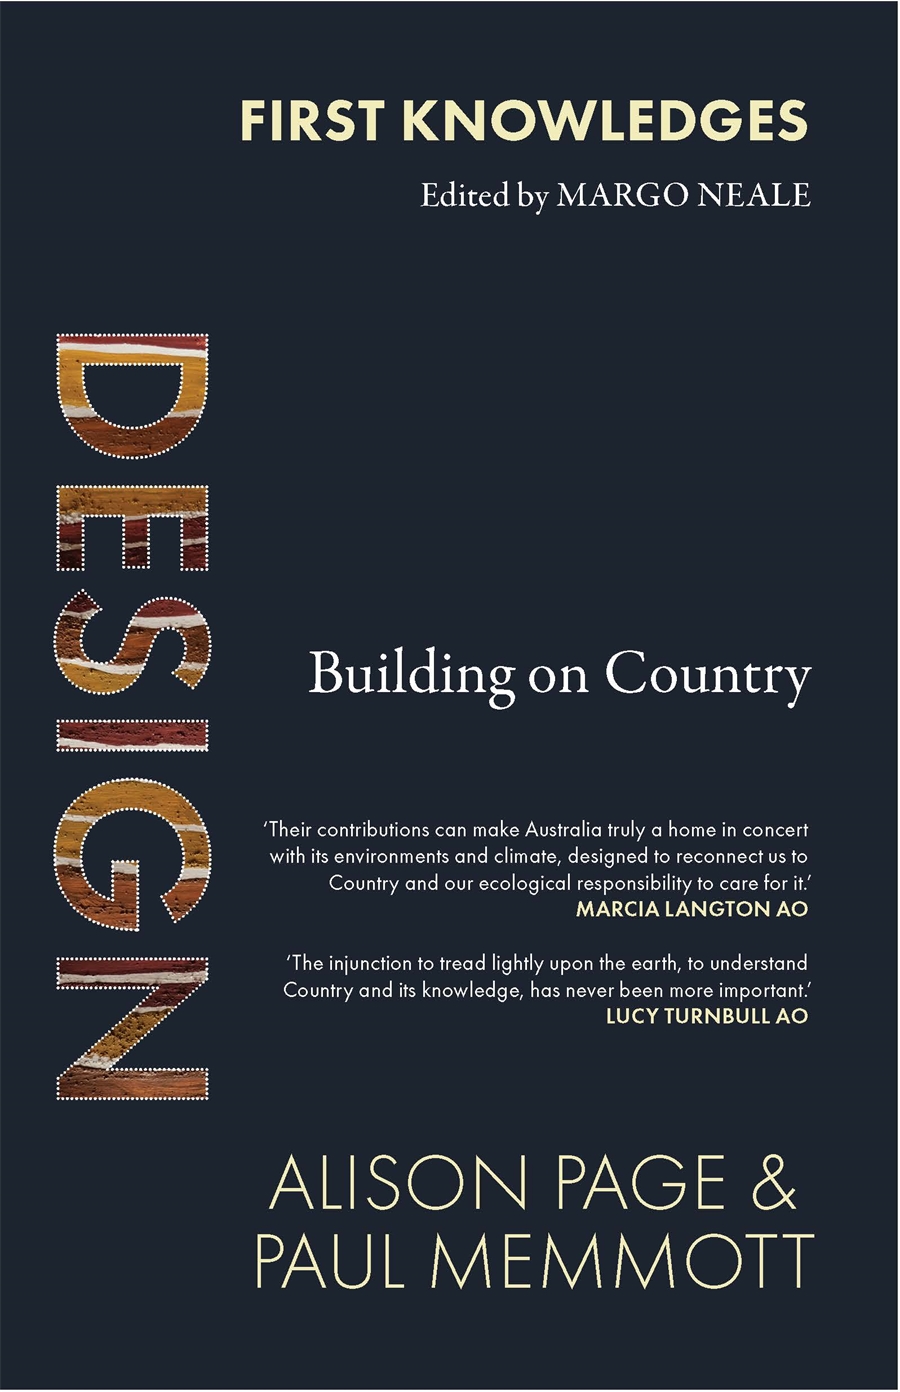 Paul Memmott, Alison Page: Design (Paperback, 2021, Thames & Hudson)